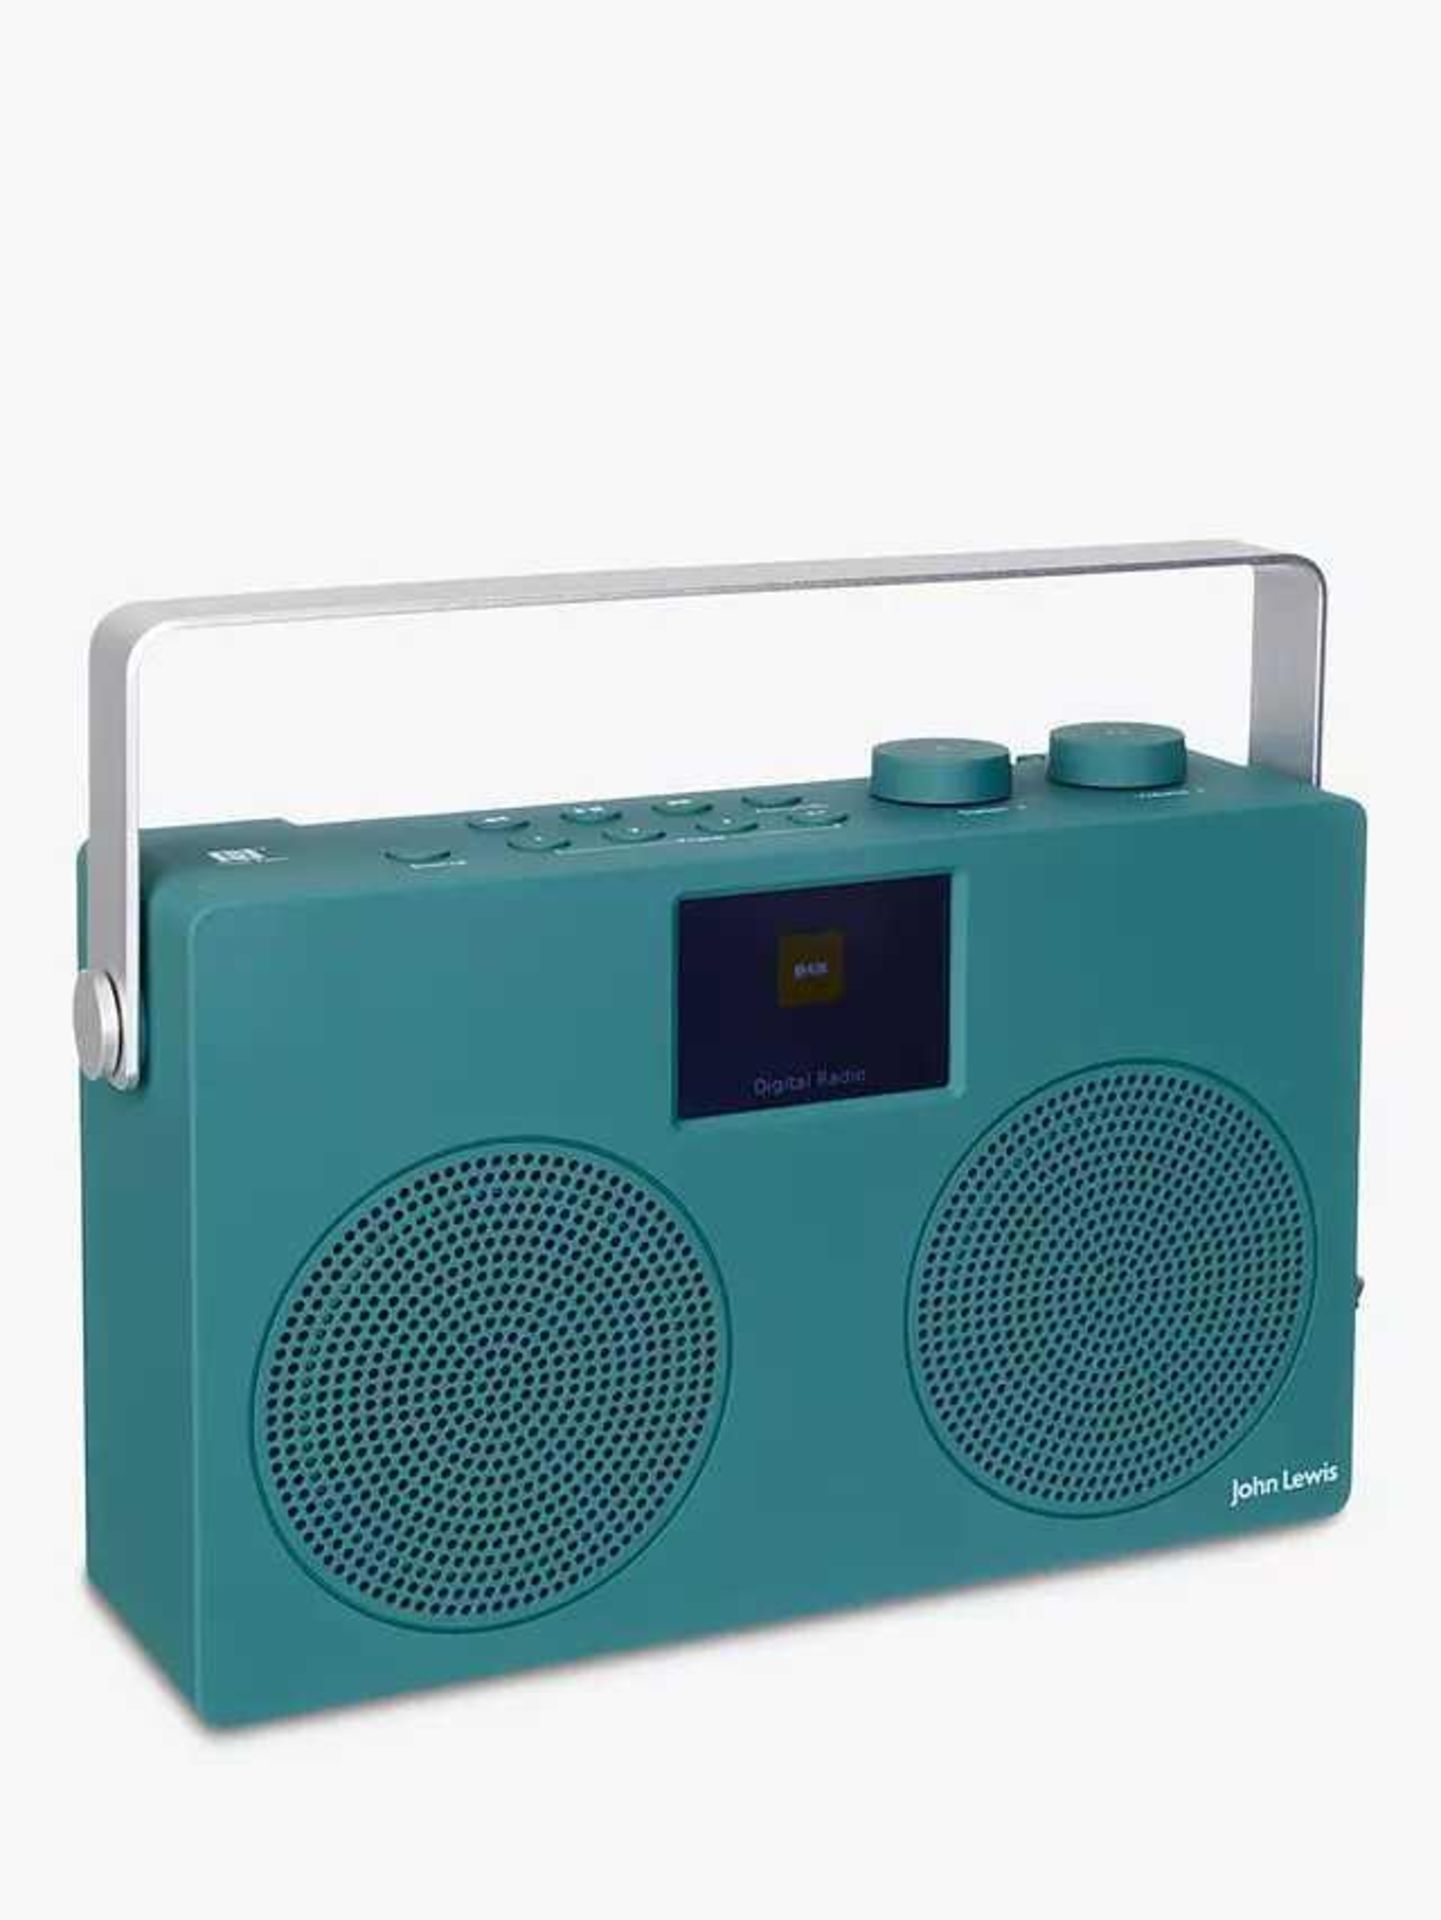 Rrp £70 Each Boxed John Lewis Spectrum Duo Dab And Fm Digital Radios - Image 2 of 4